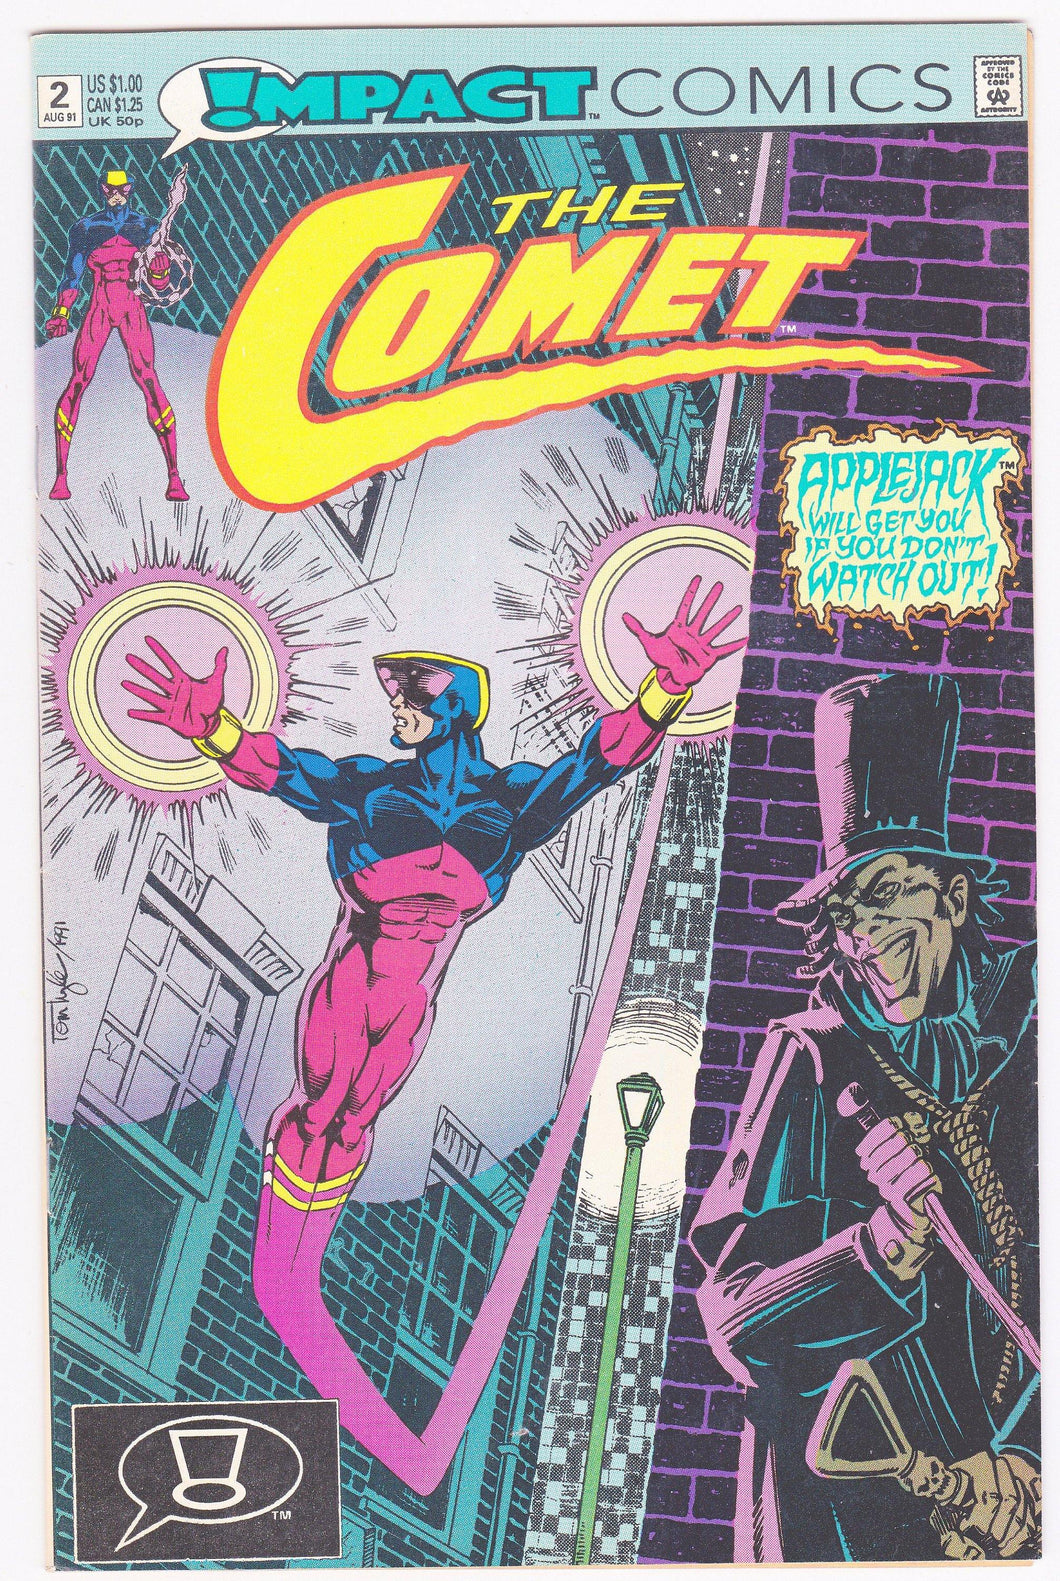 The Comet Issue #2 August 1991 Impact Comics Comic Book - TulipStuff